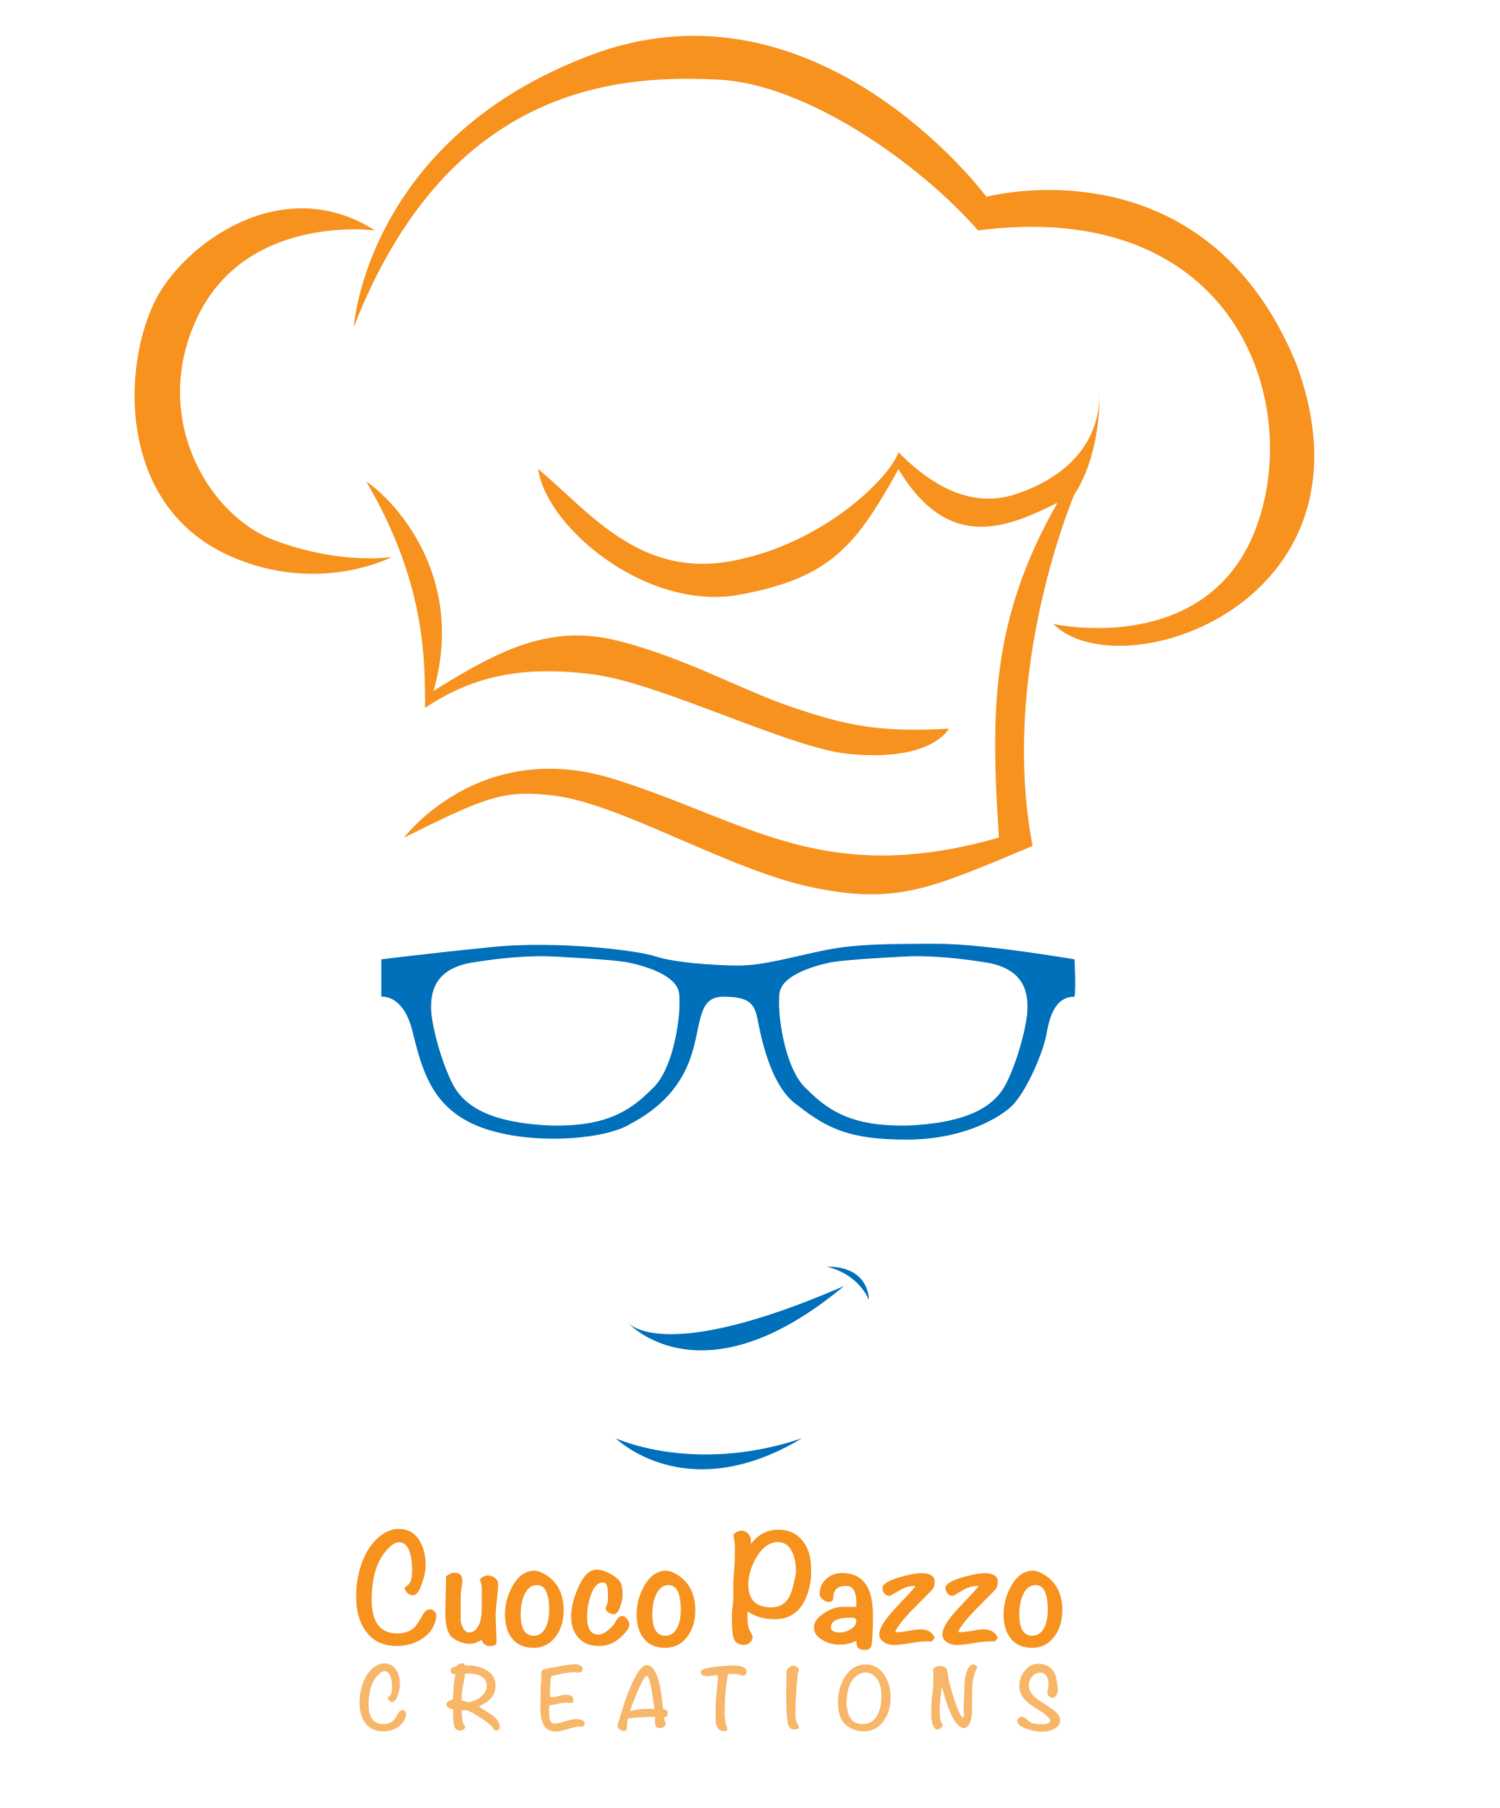 Cuoco Pazzo Creations